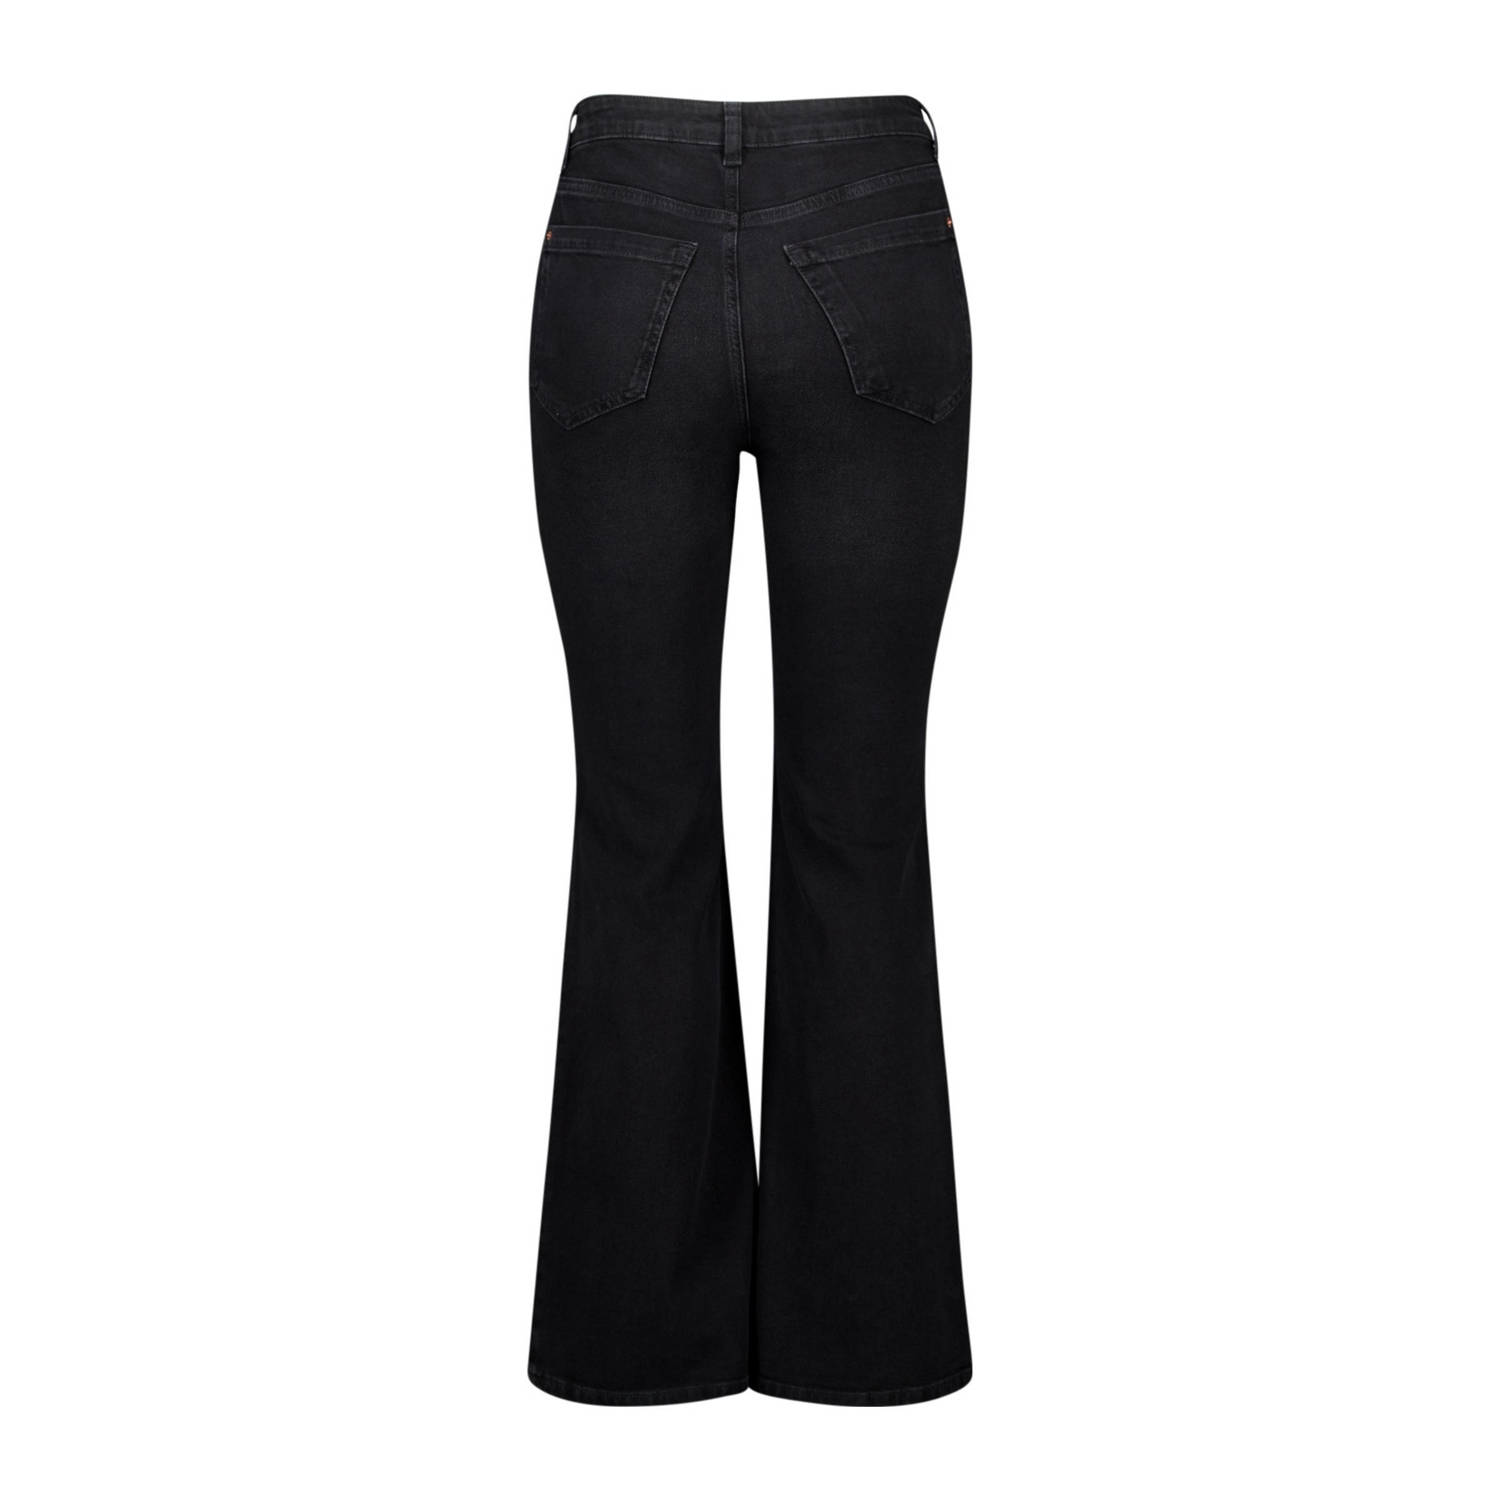 MS Mode high waist flared jeans black denim